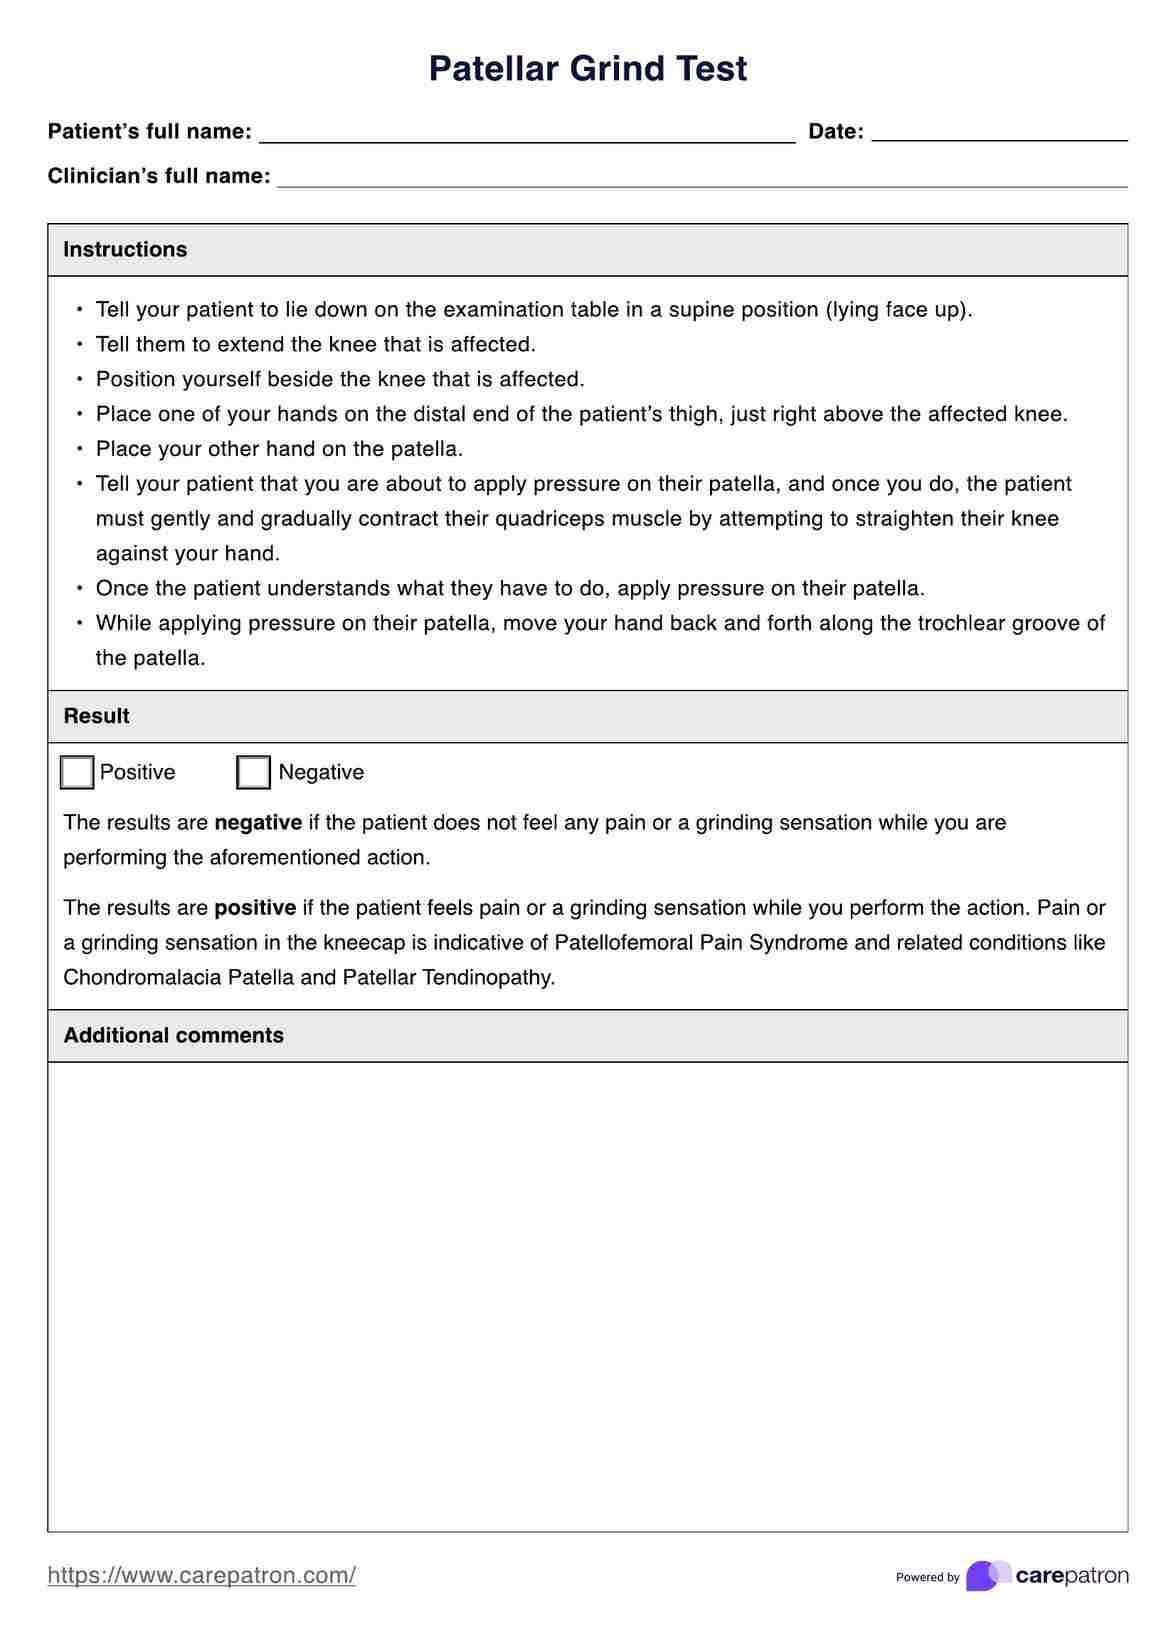 Patellar Grind Test PDF Example